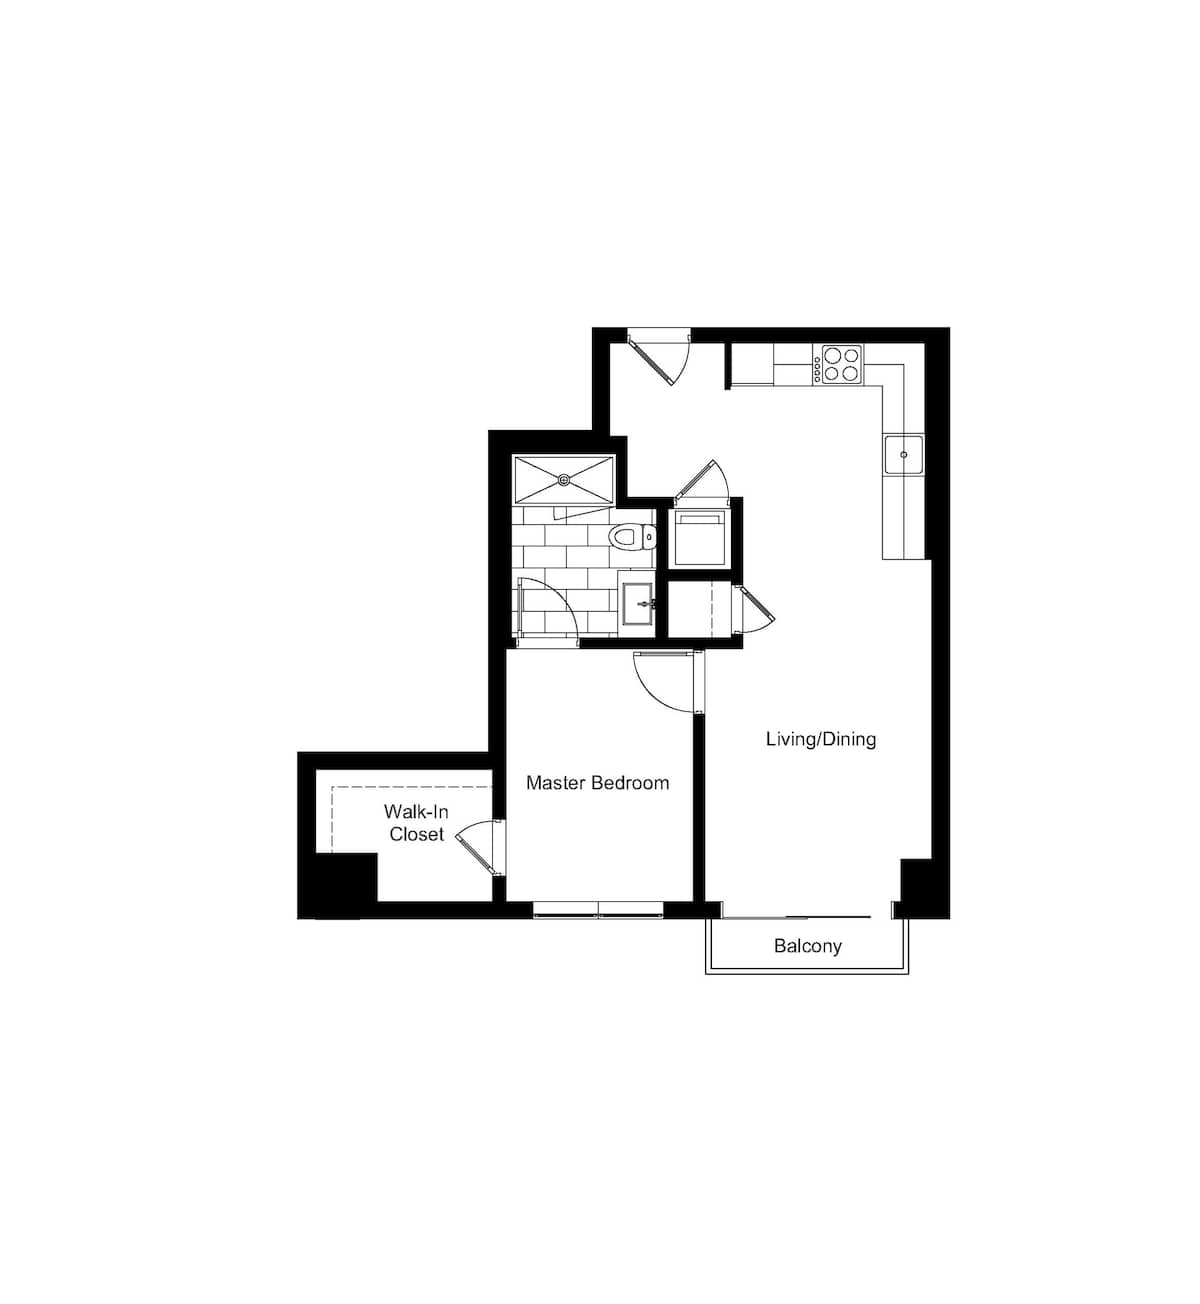 Floorplan diagram for Edendale, showing 1 bedroom